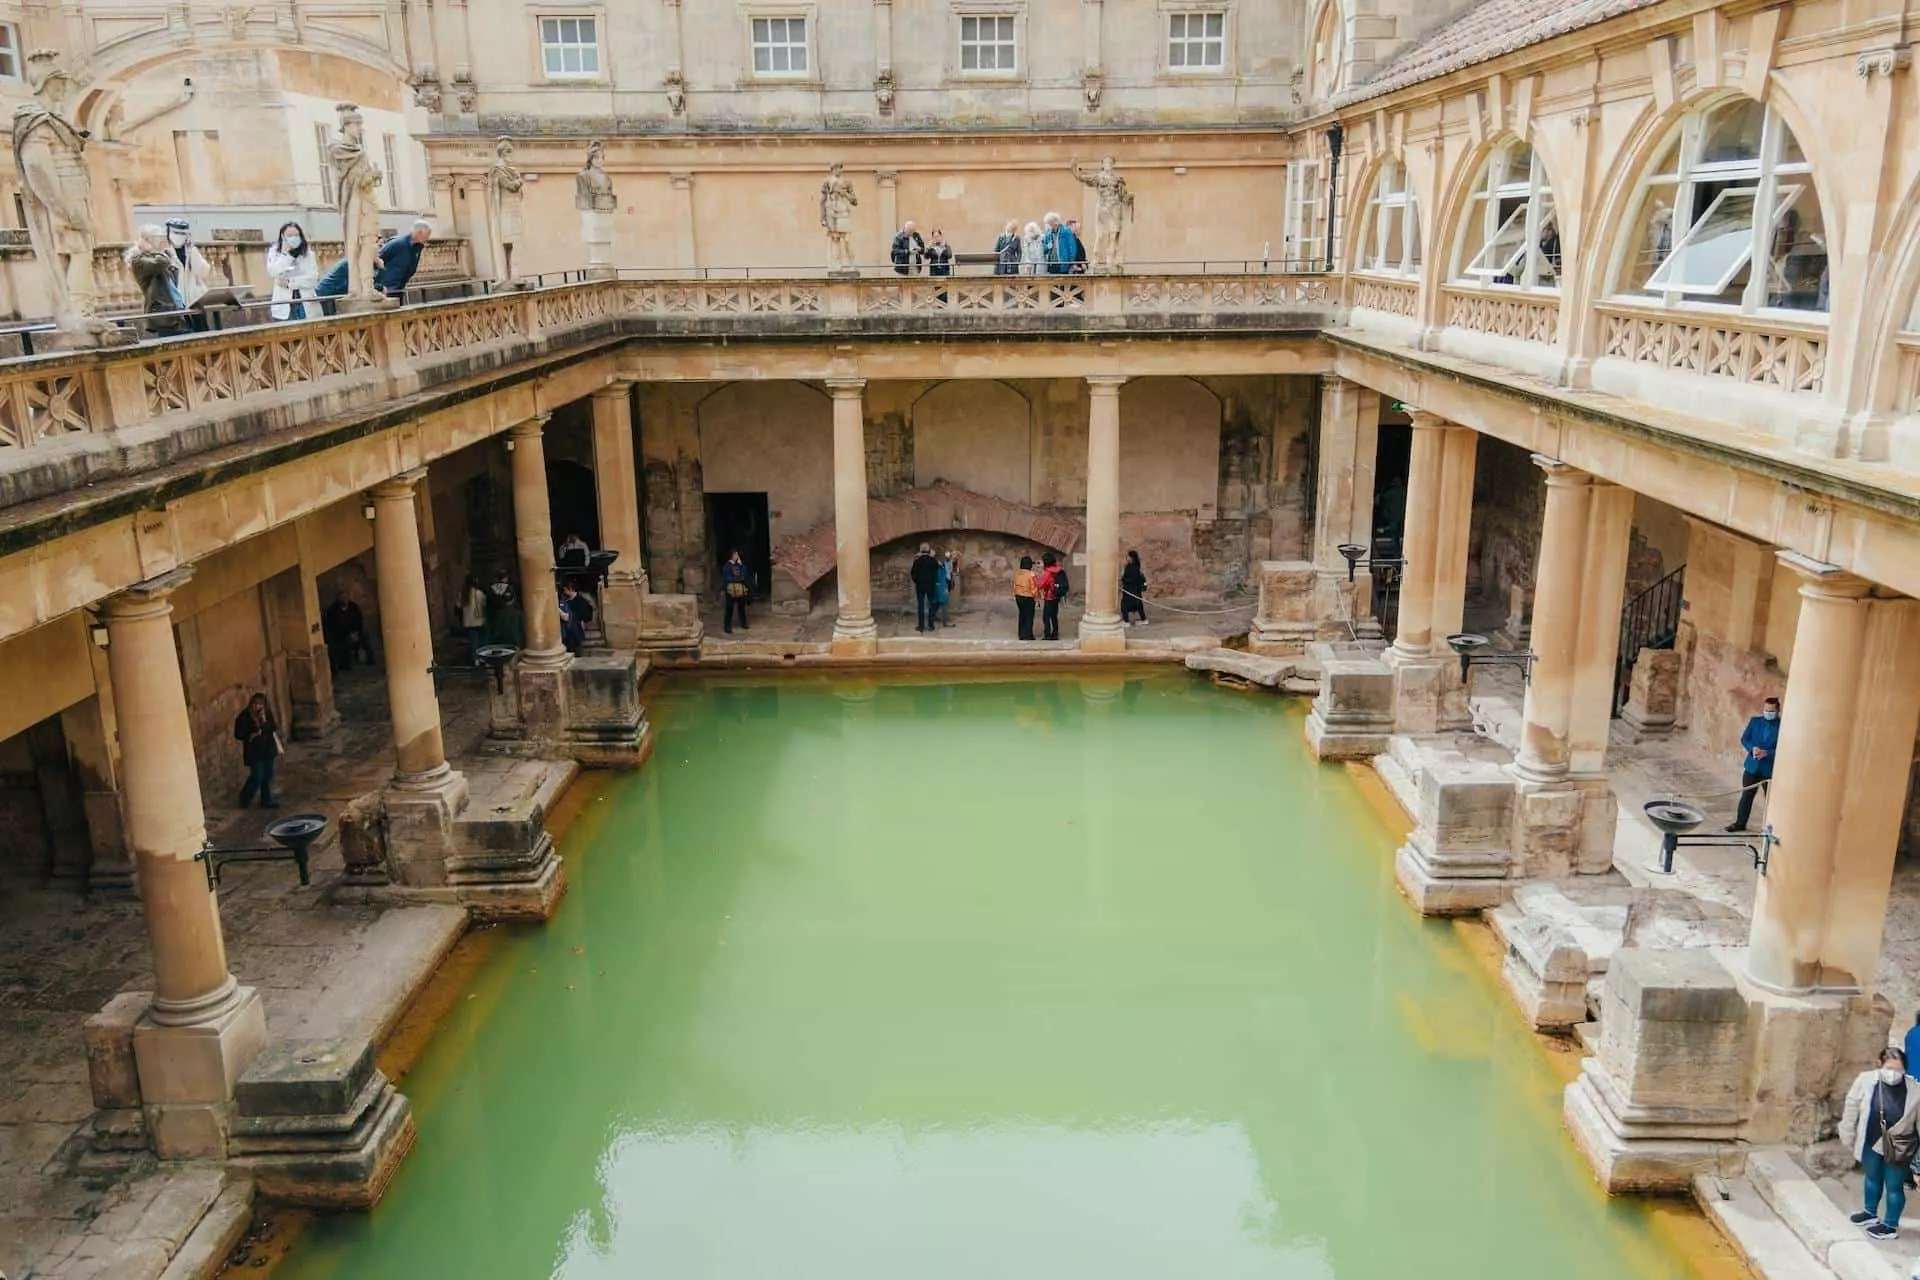 Roman baths in the UK